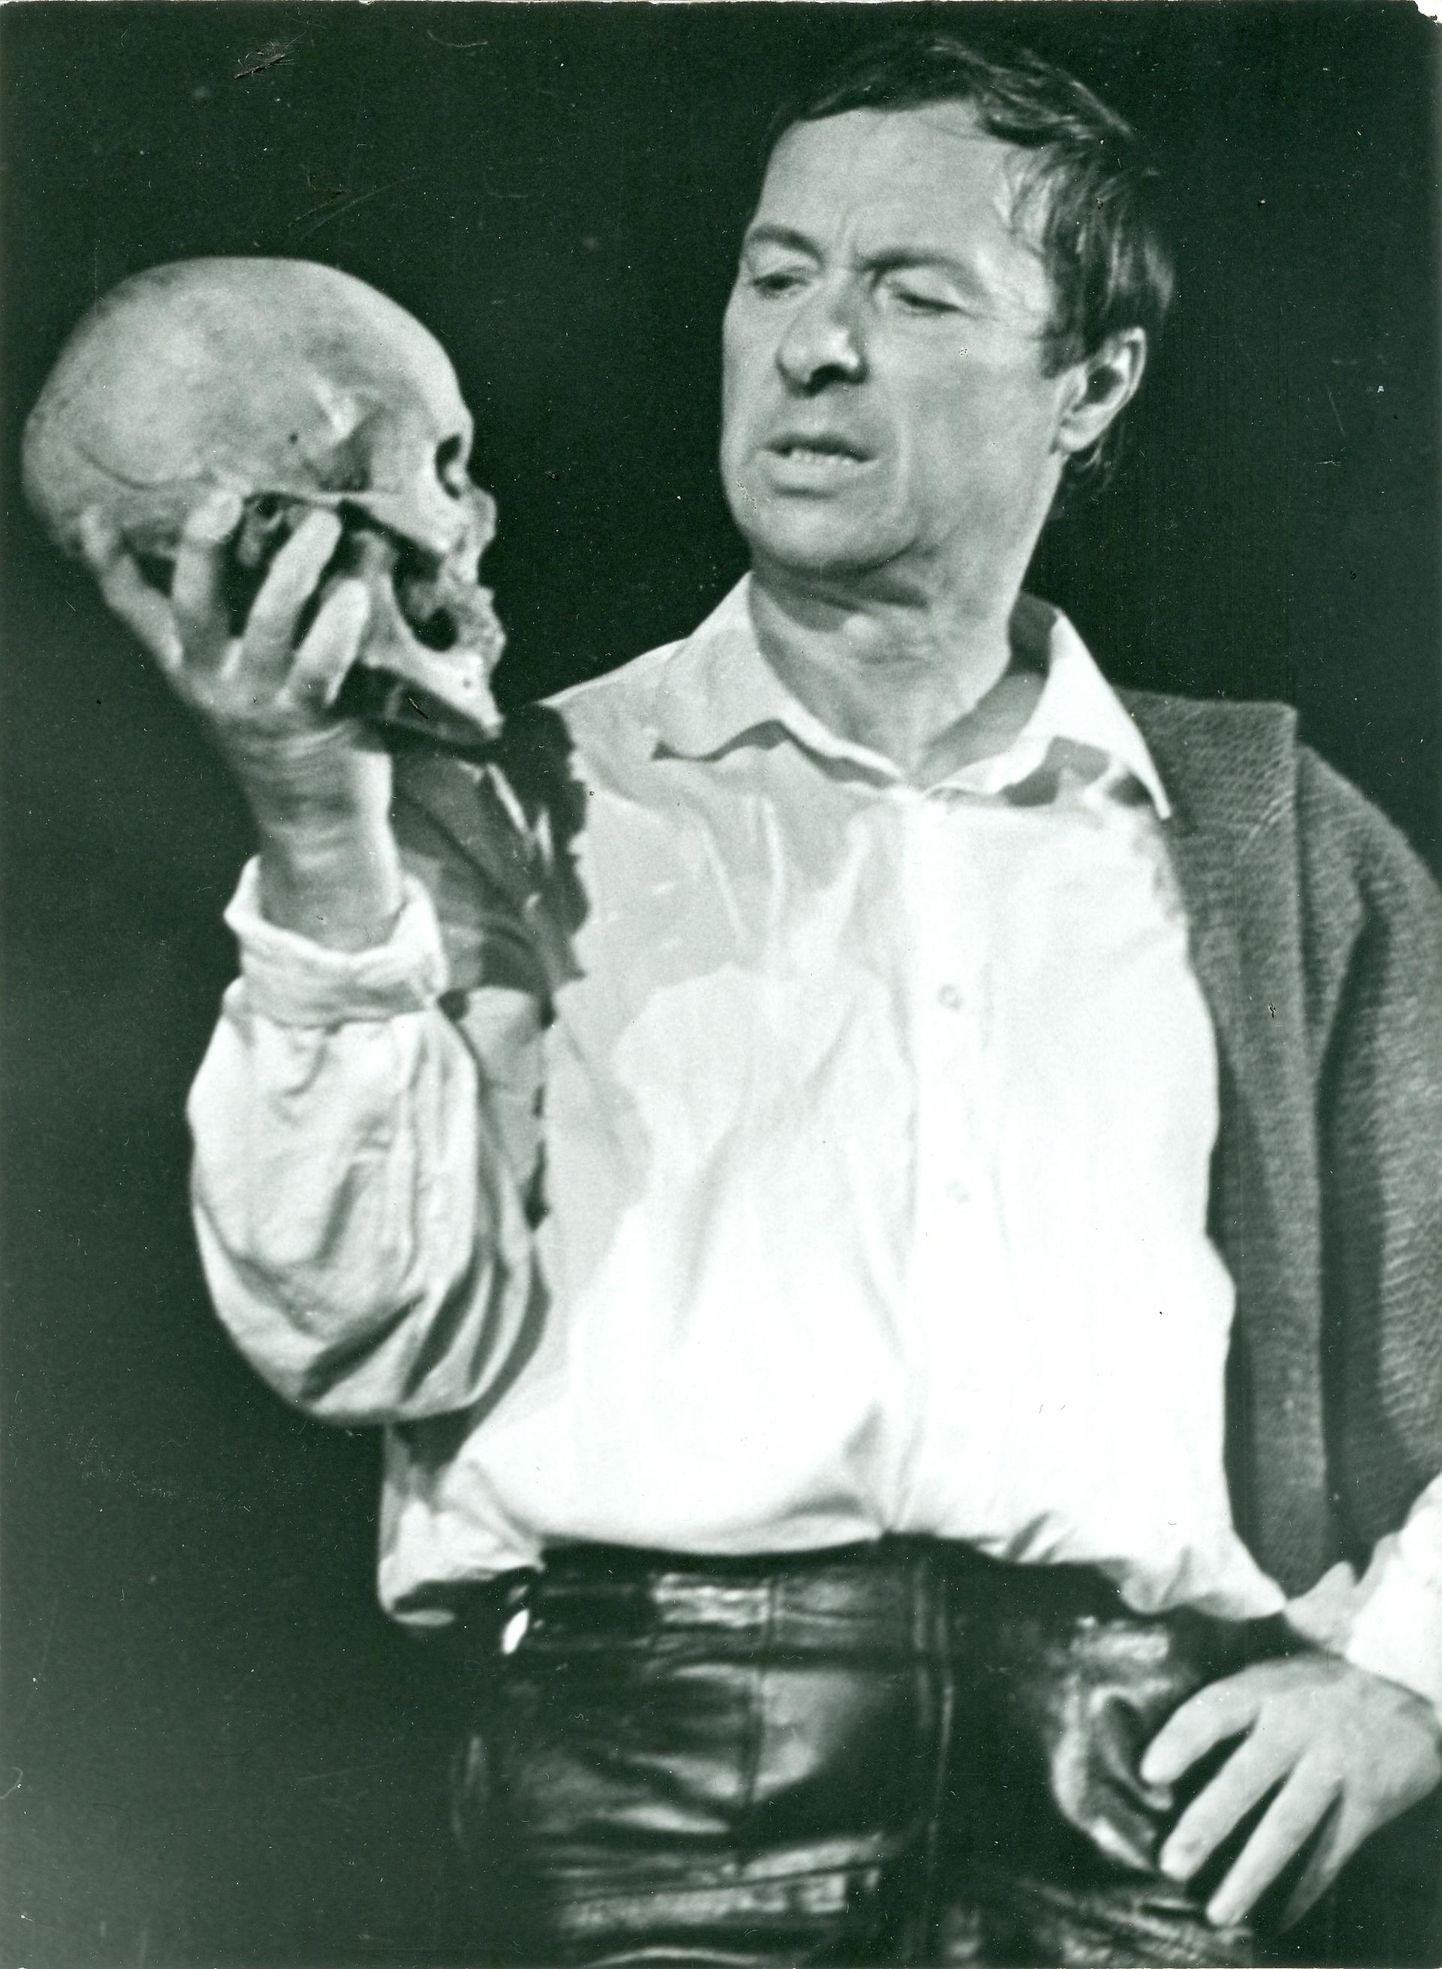 Ants Eskola tipprolliks oli Hamlet.